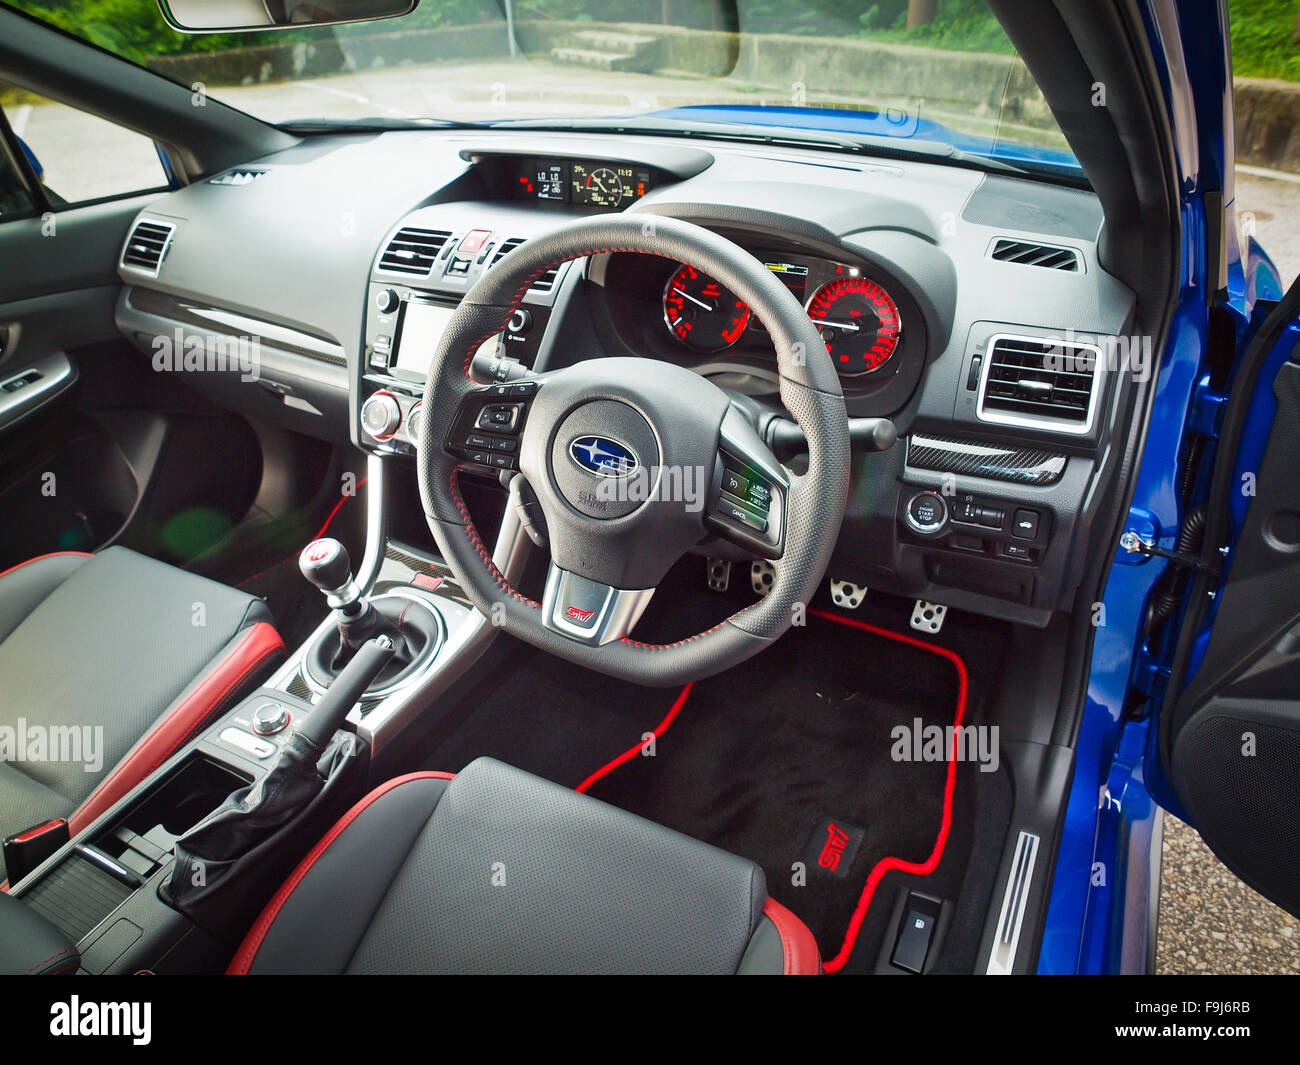 Subaru wrx sti hi-res stock photography and images - Alamy